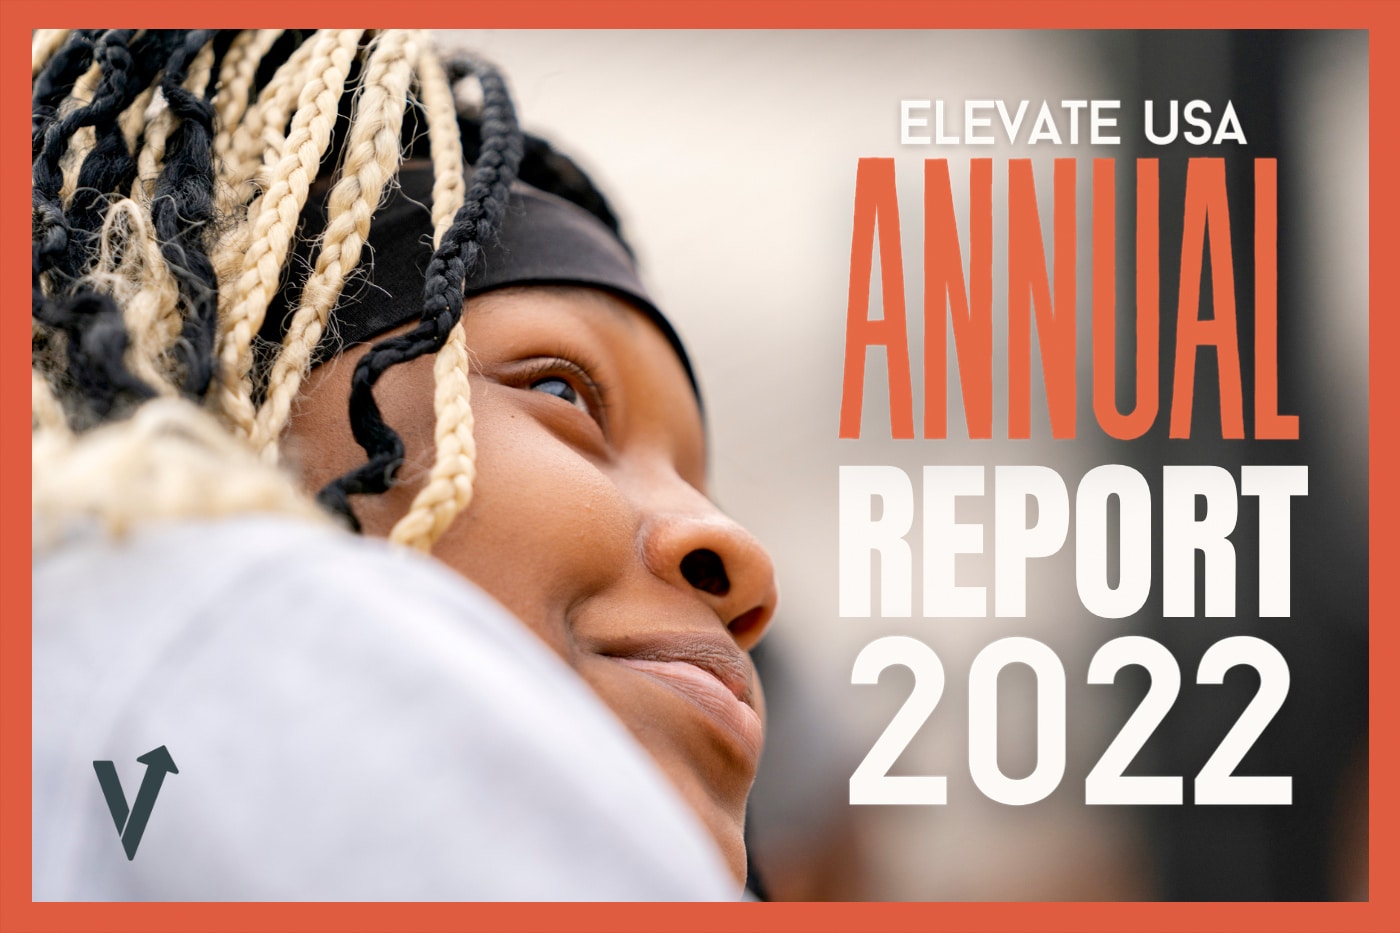 Elevate USA Annual Report 2022